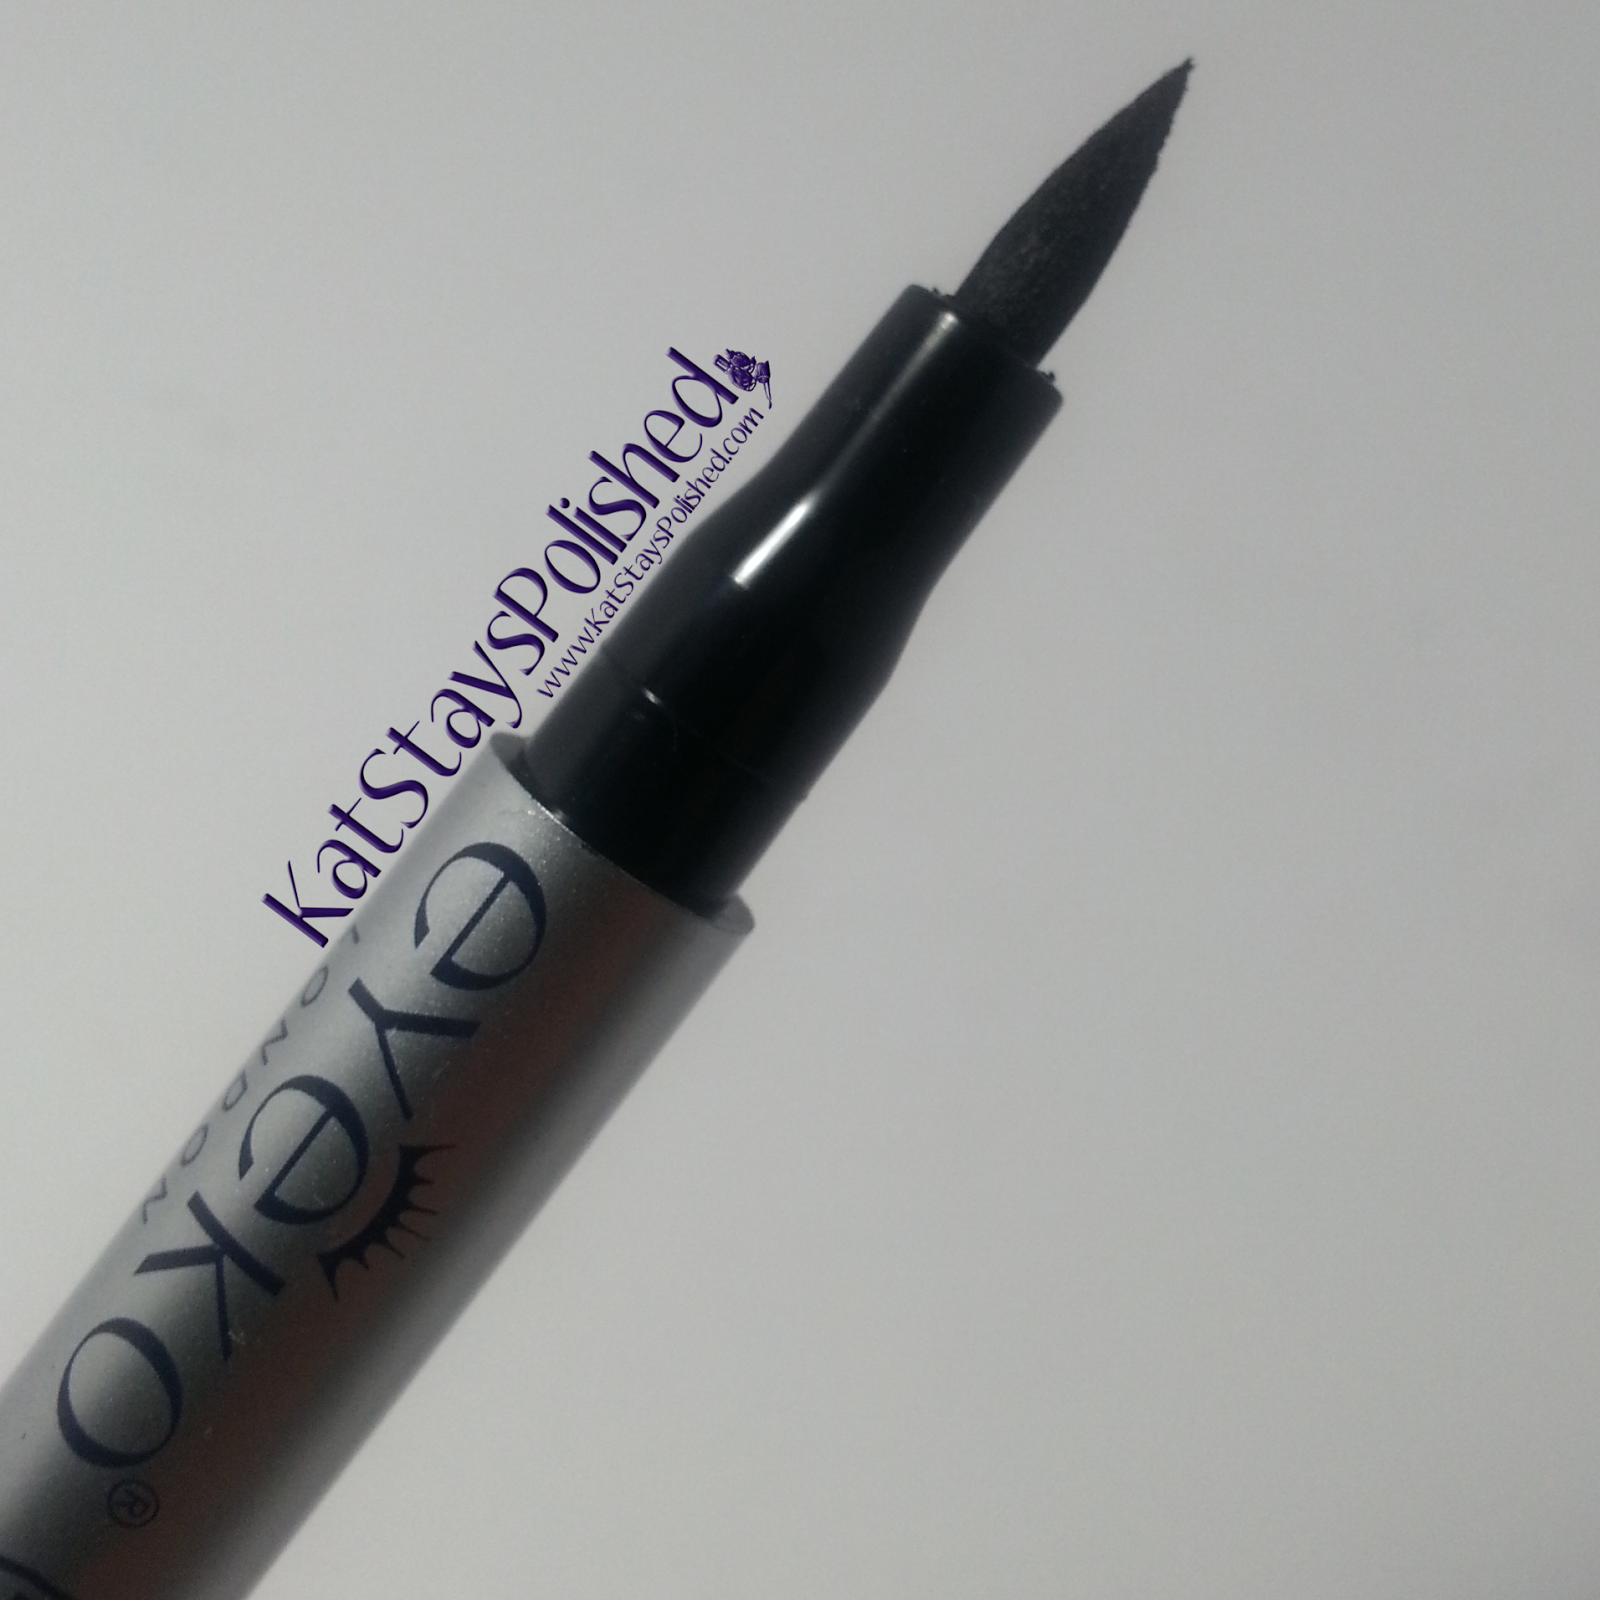 Glossybox - August 2014 - Eyeko Skinny Liquid Eyeliner | Kat Stays Polished